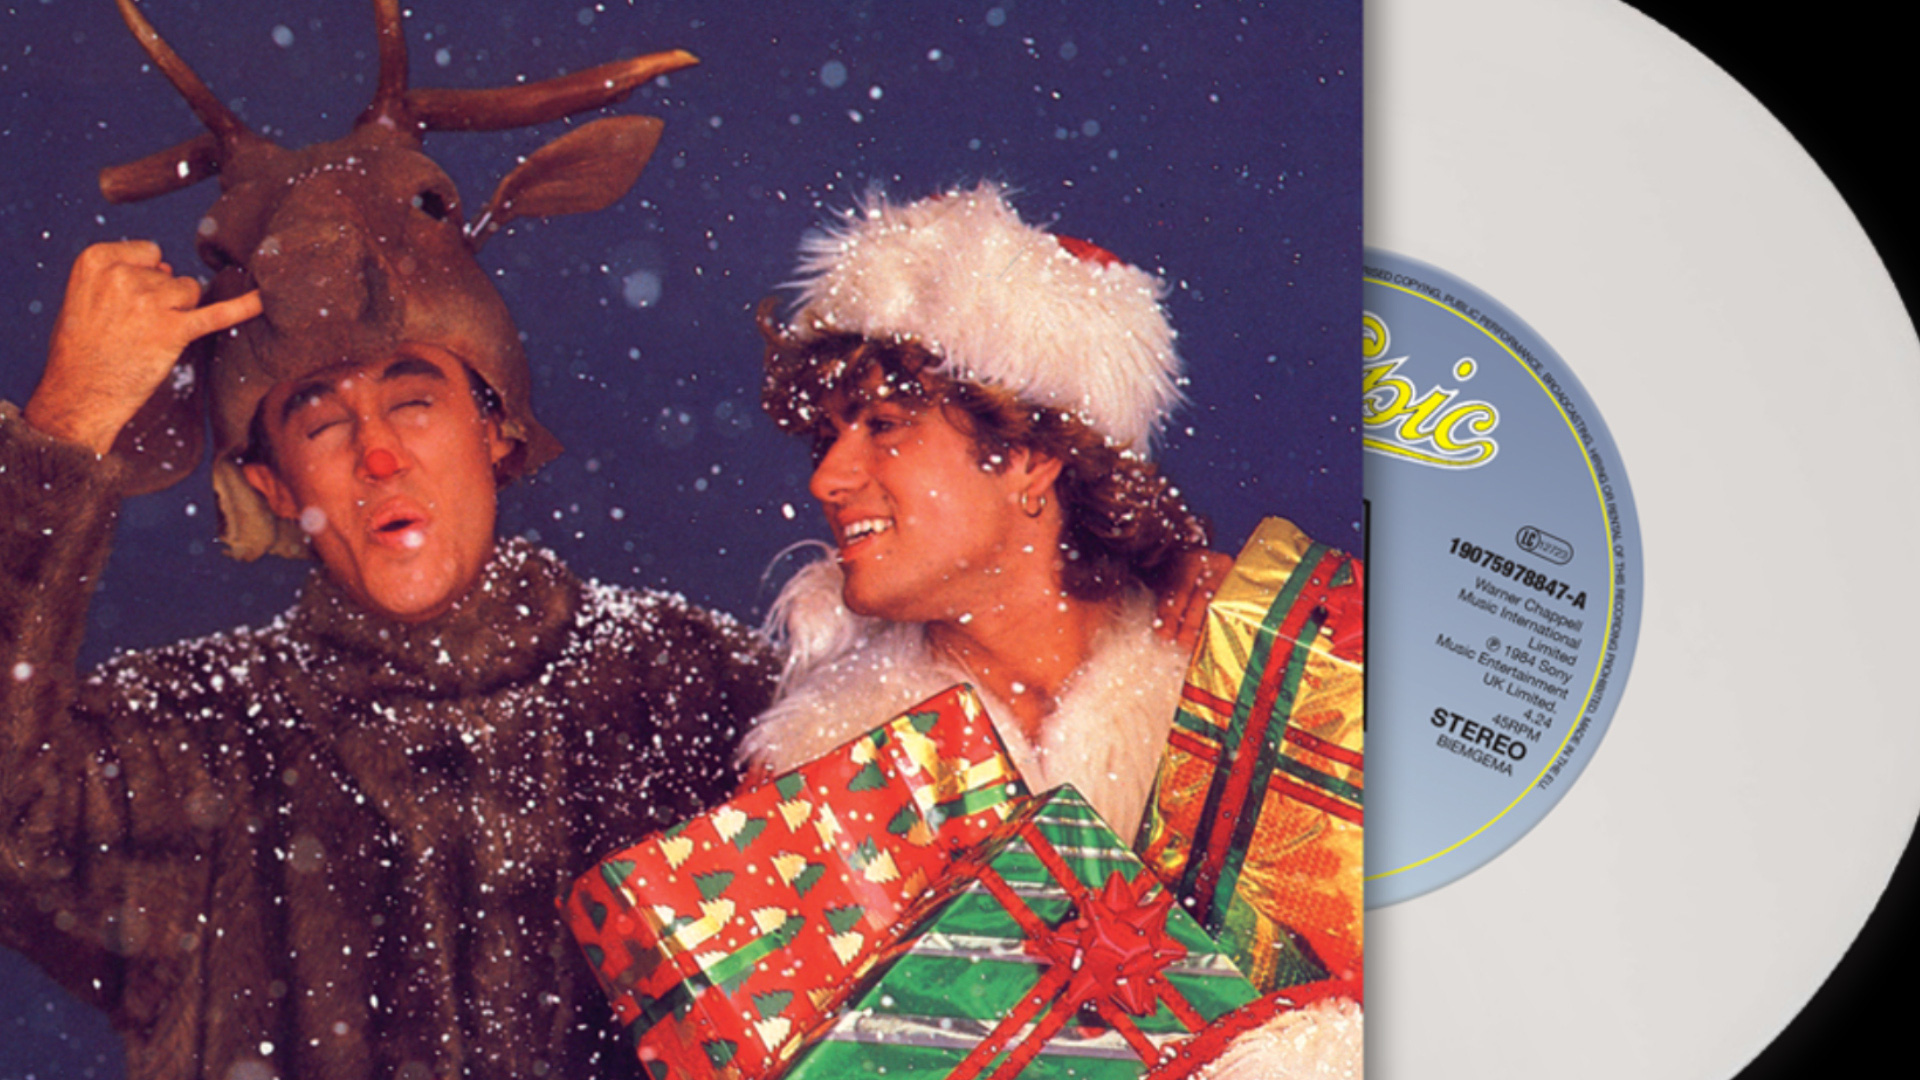 Ласт кристмас джордж. Wham last Christmas обложка. George Michael Wham last Christmas.